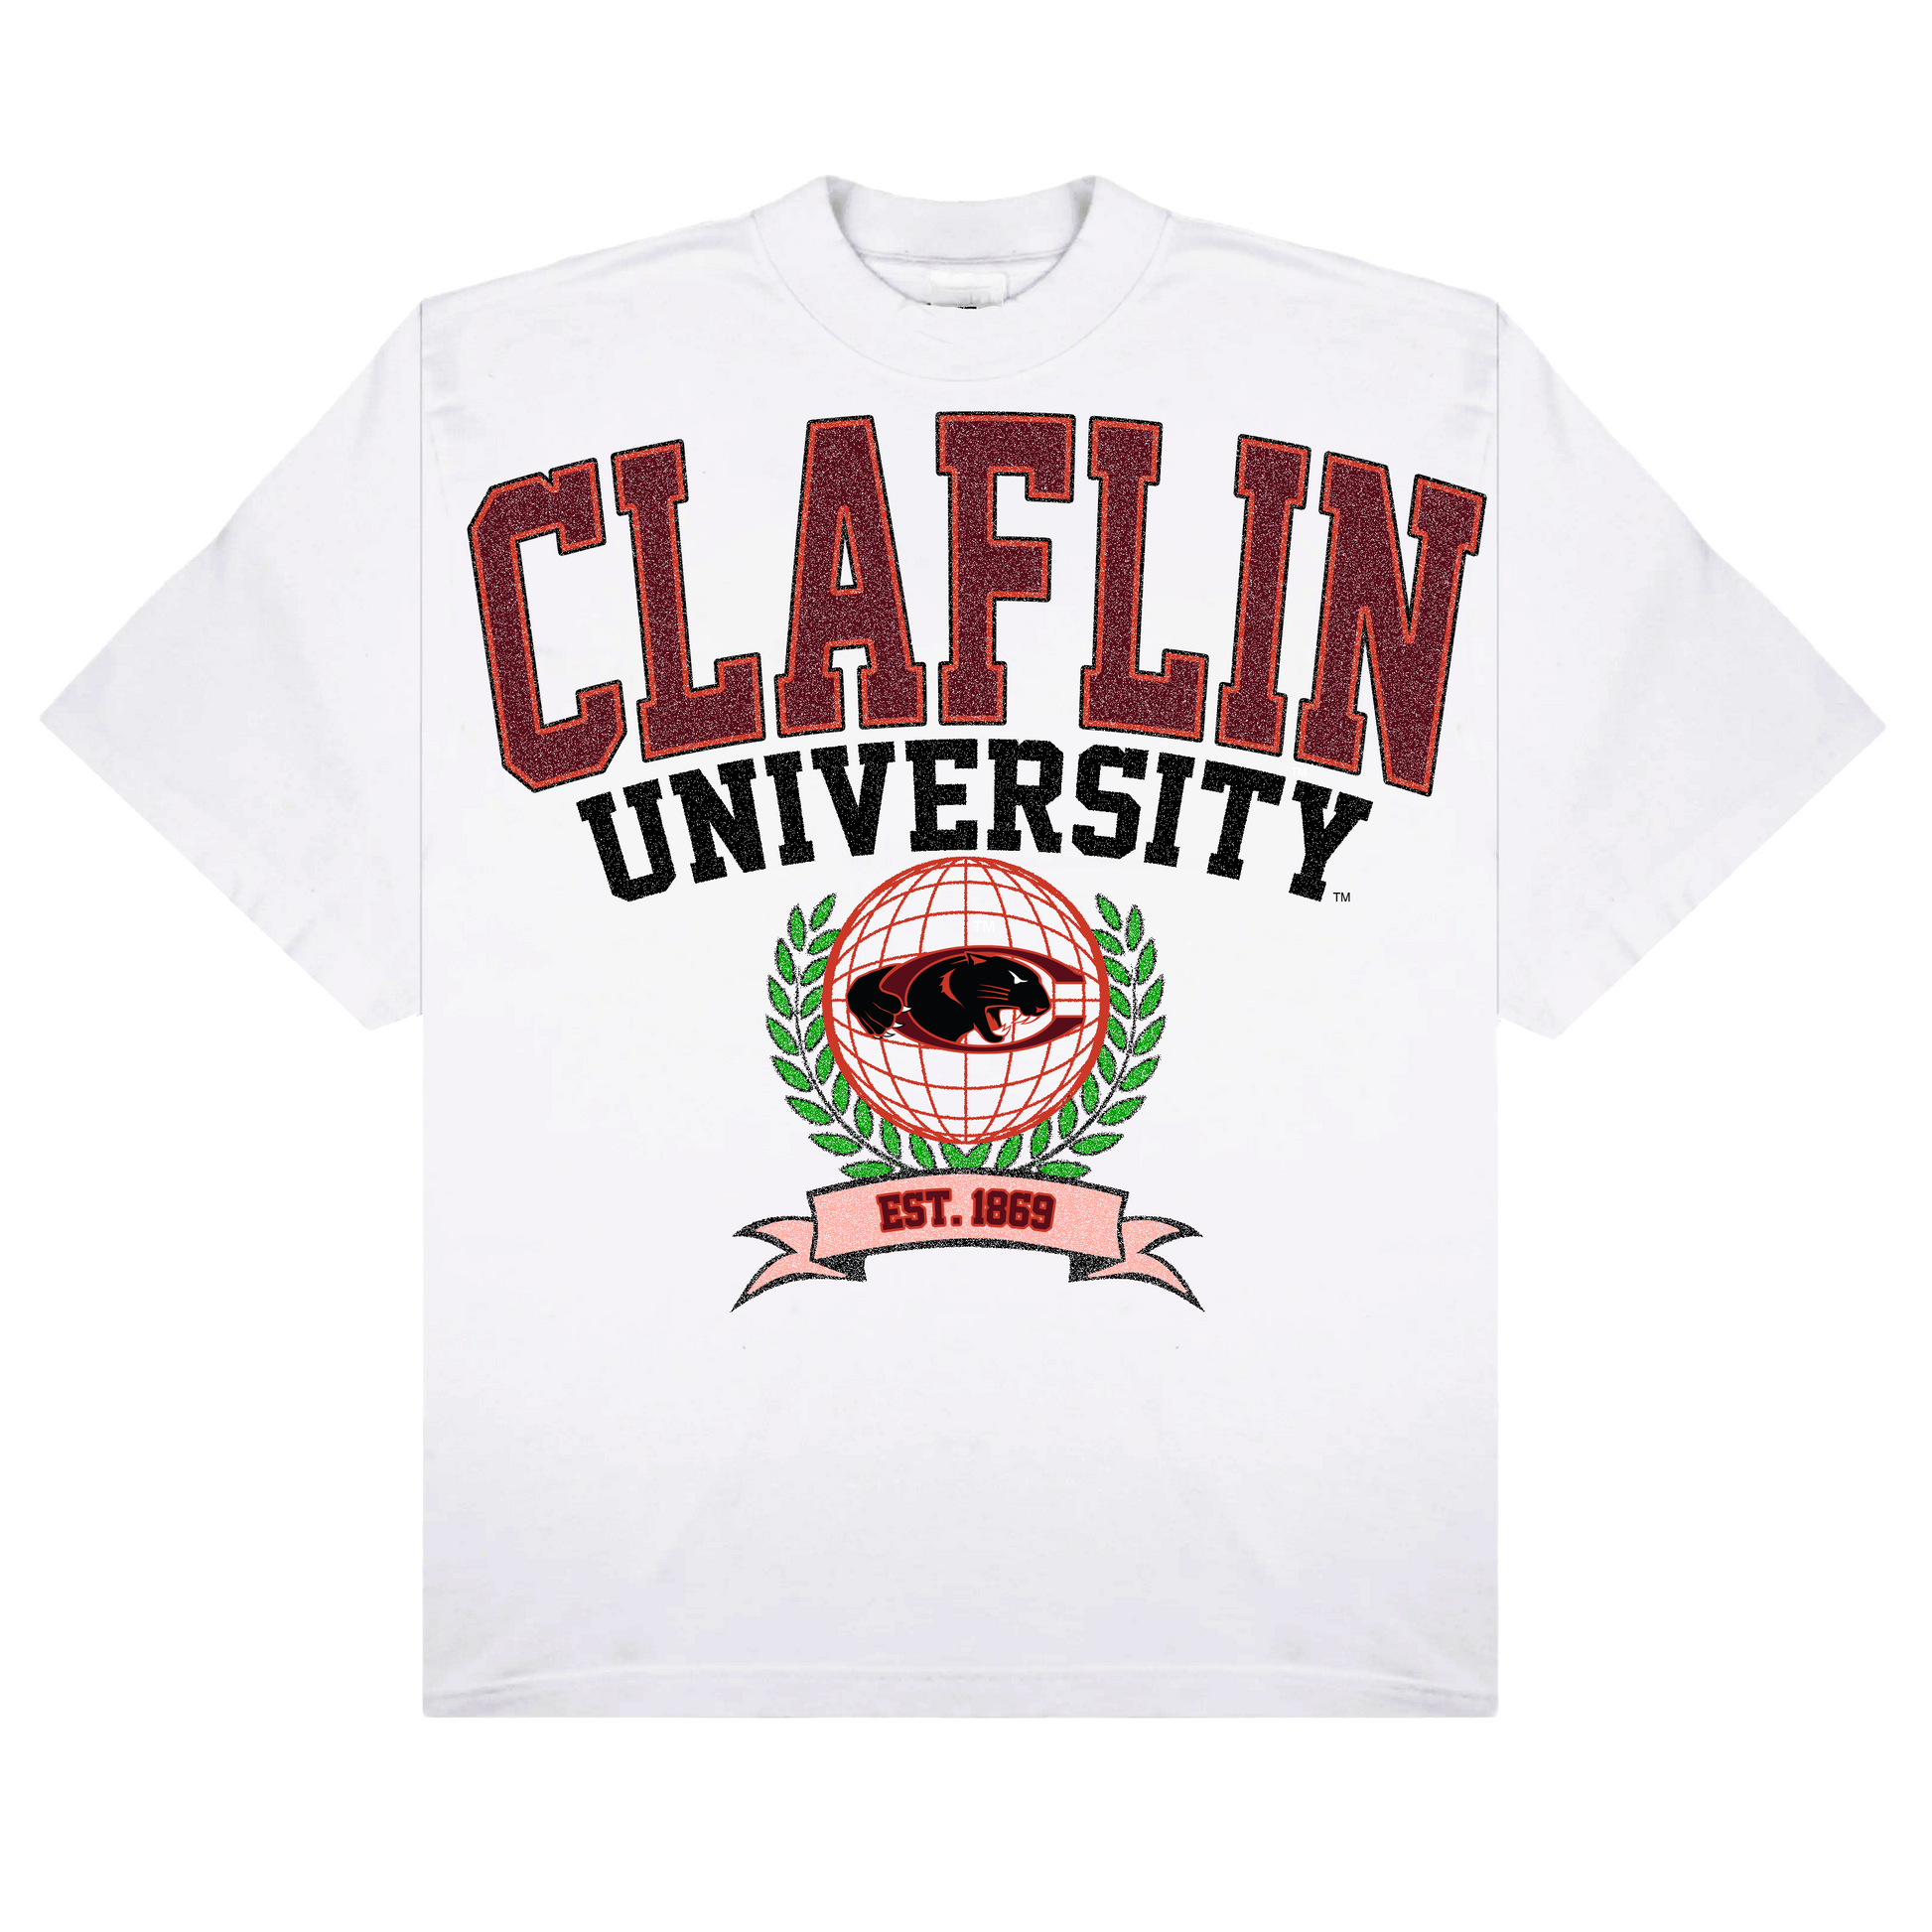 Claflin University T-shirt - 1921 movement